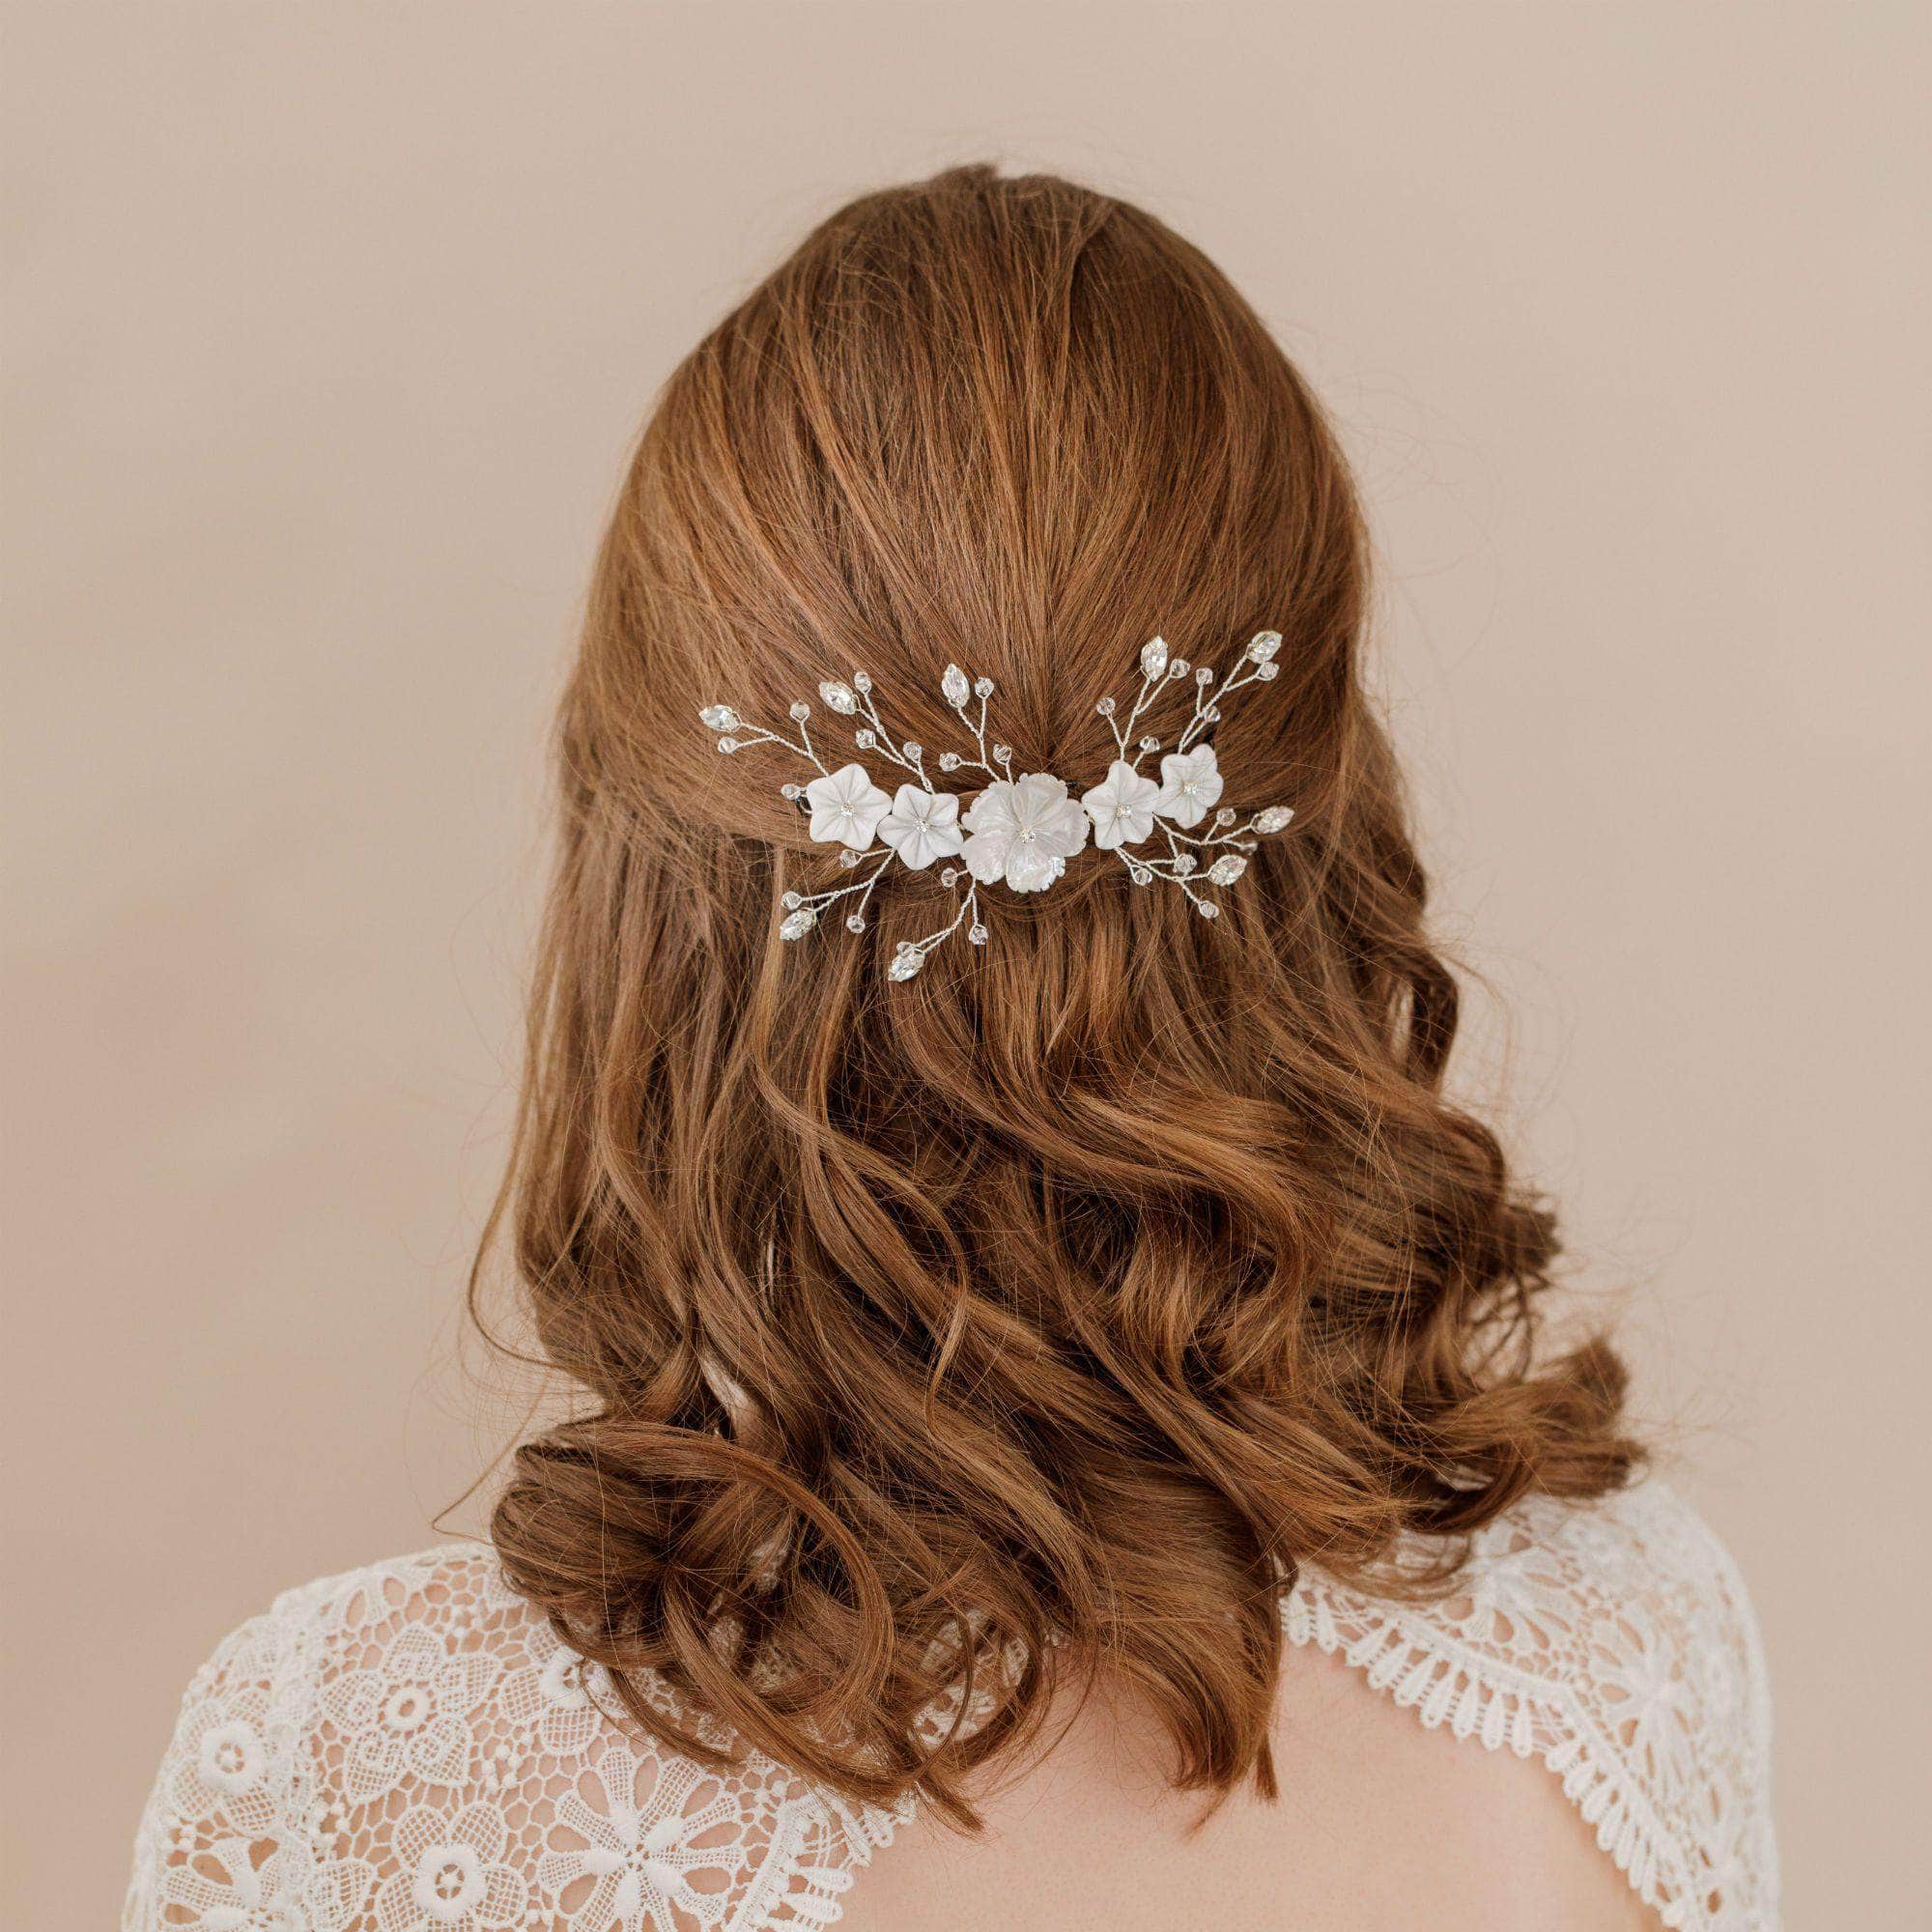 Silver floral hair centrepiece - 'Jaime' | Britten Weddings